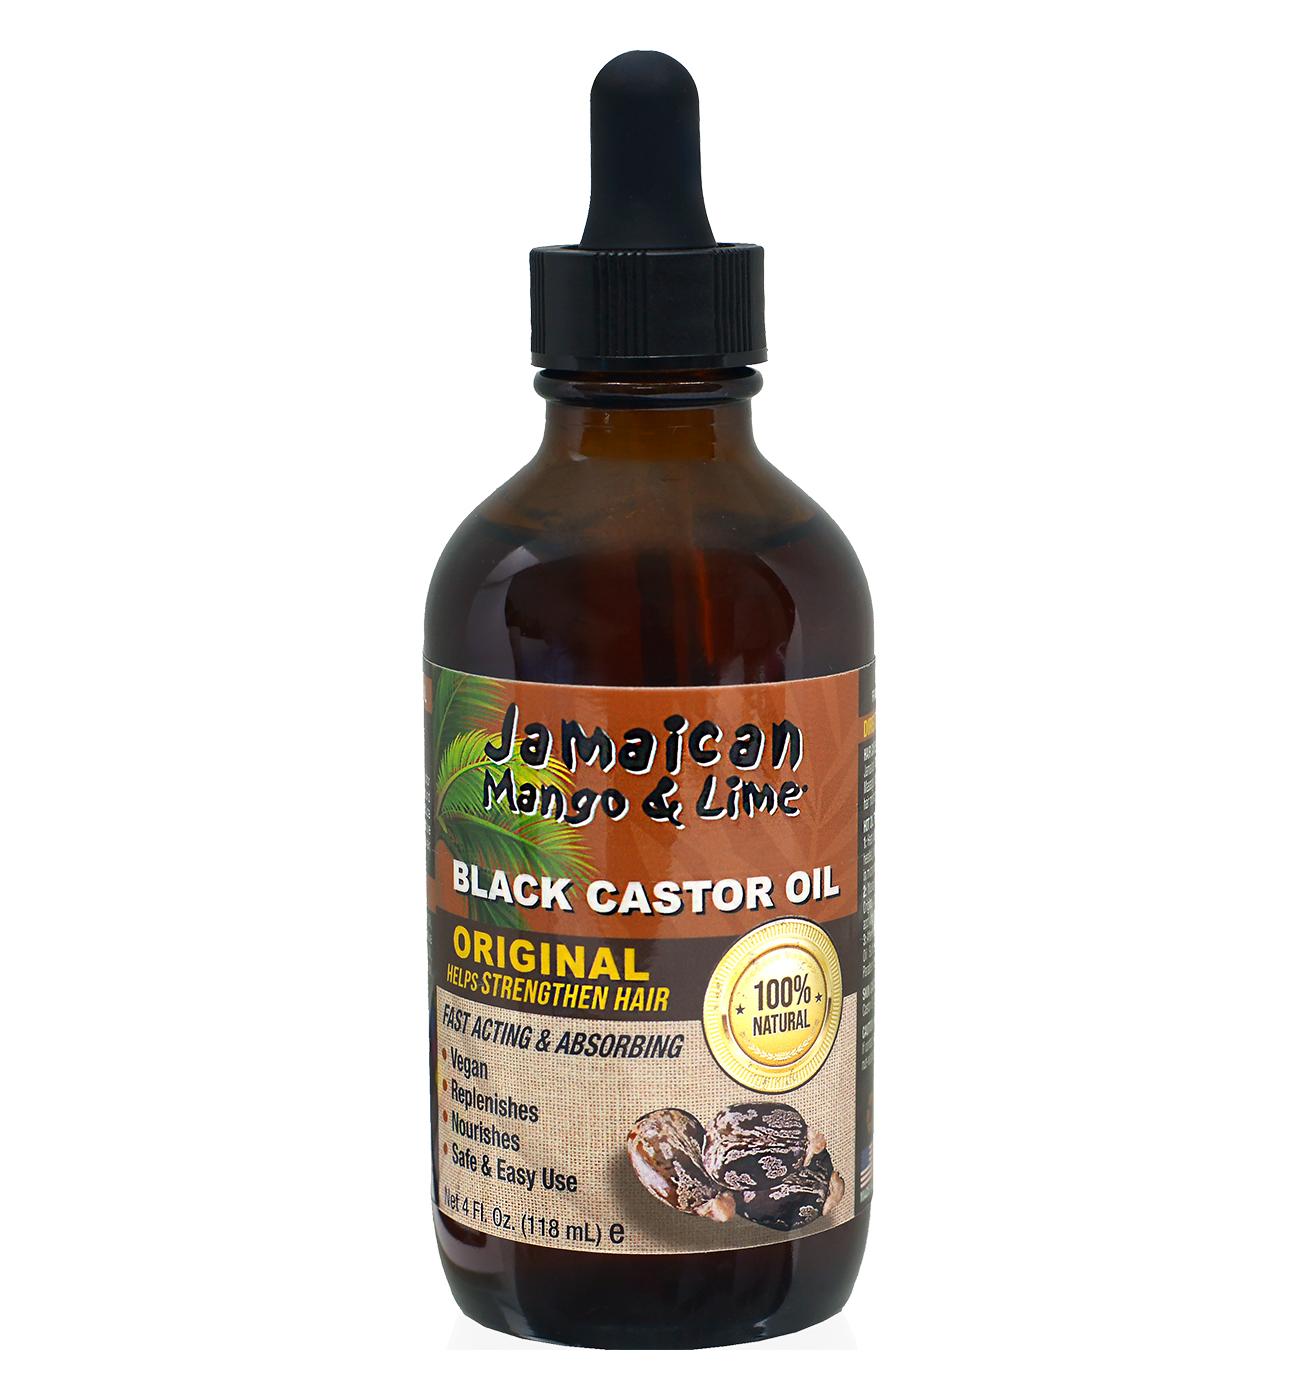 Jamaican Mango & Lime Black Castor Oil - Original; image 1 of 3